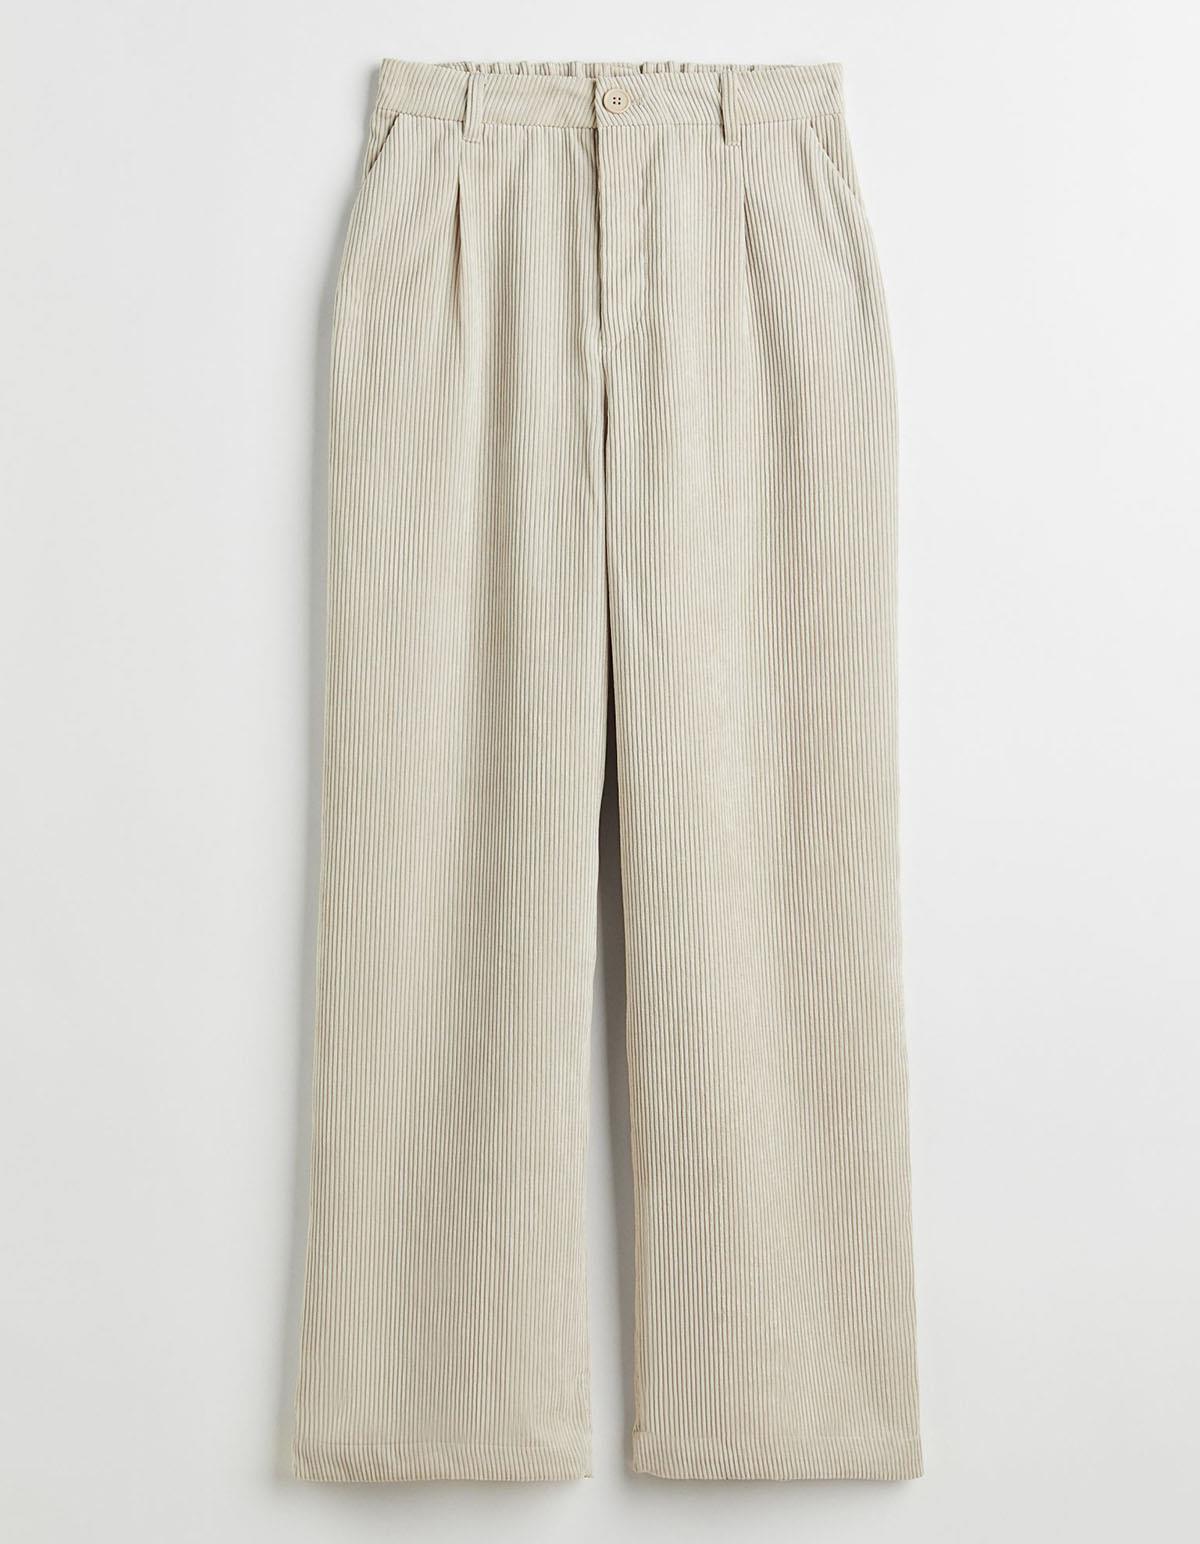 Pantalones HM. Pantalón ancho, de H&M